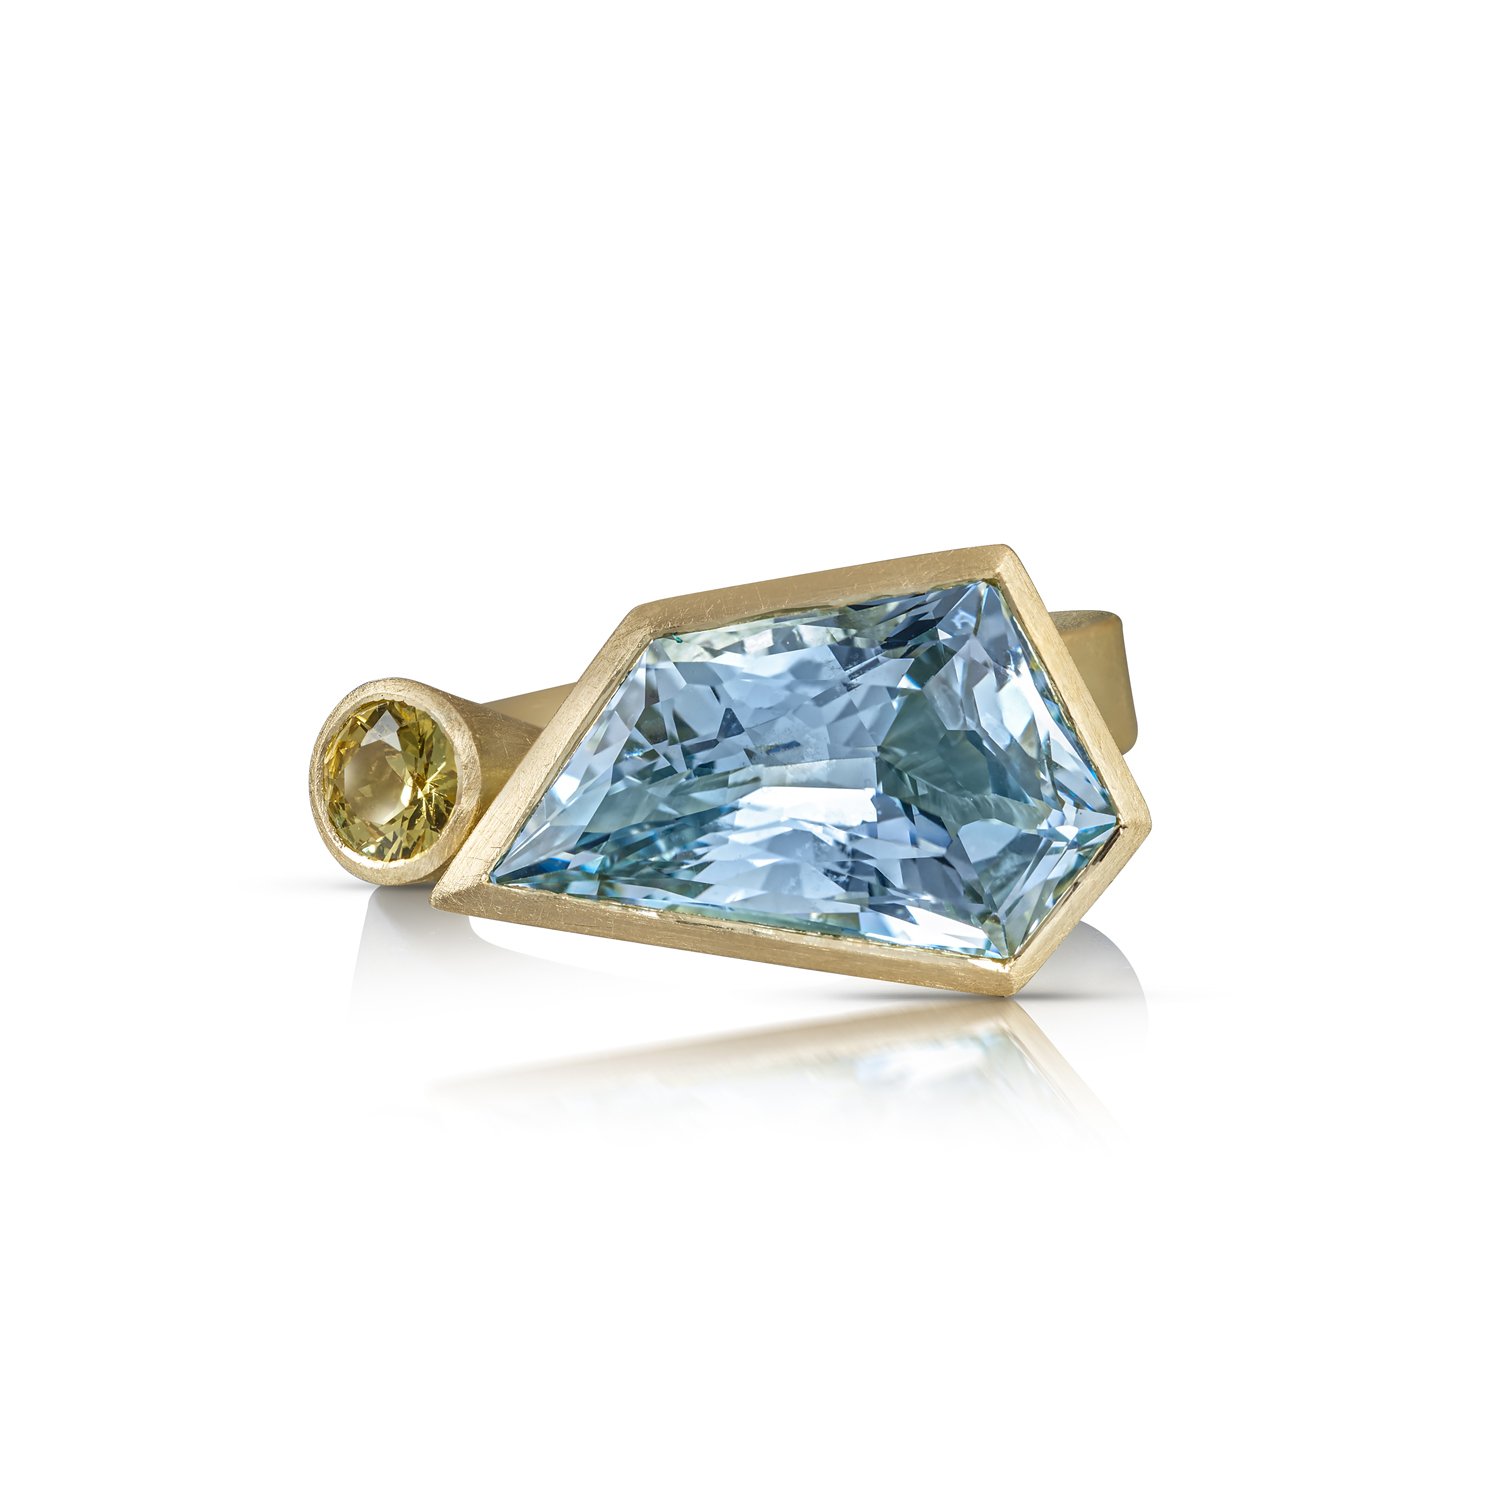 Mark Nuell Aquamarine gold ring sapphire.jpg